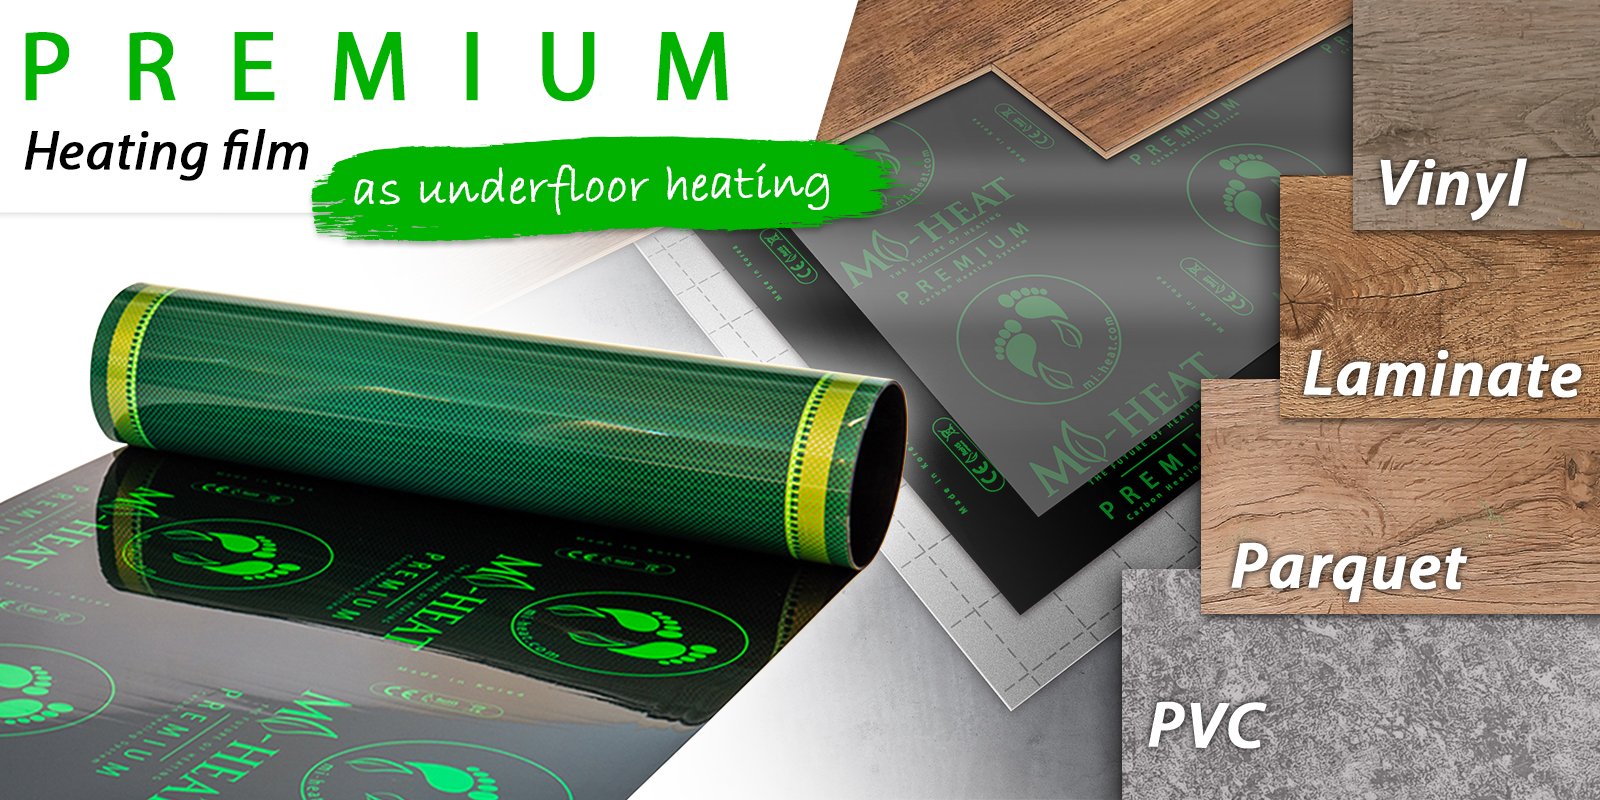 Mi-Heat Premium heating film - newly arrived